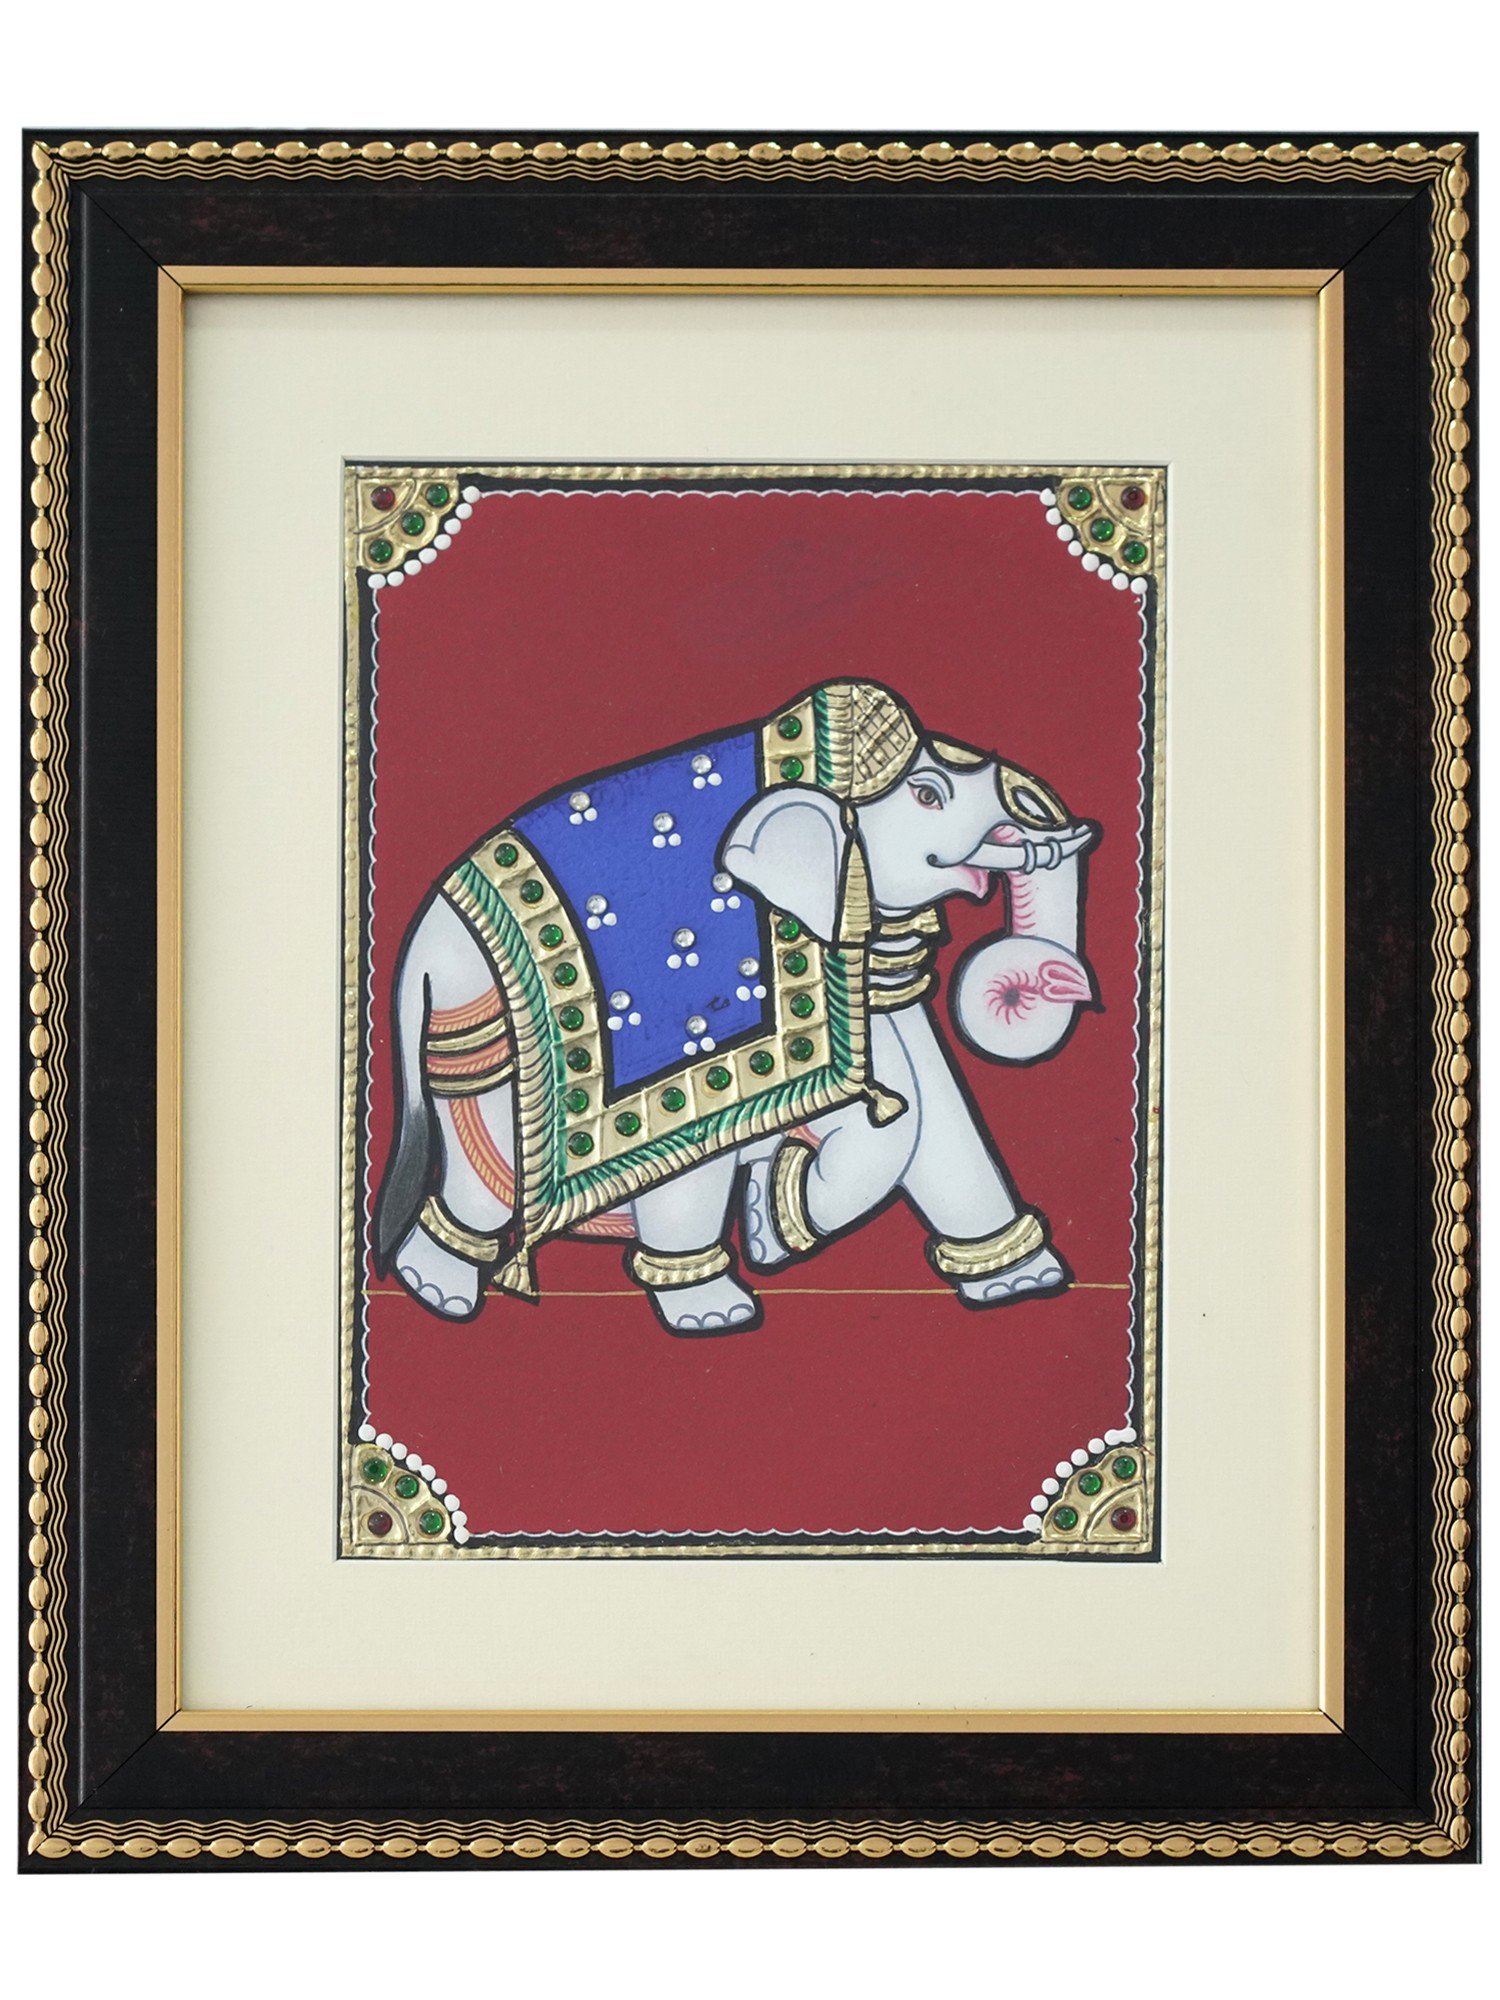 281 Rough Sketches Elephants Images, Stock Photos & Vectors | Shutterstock